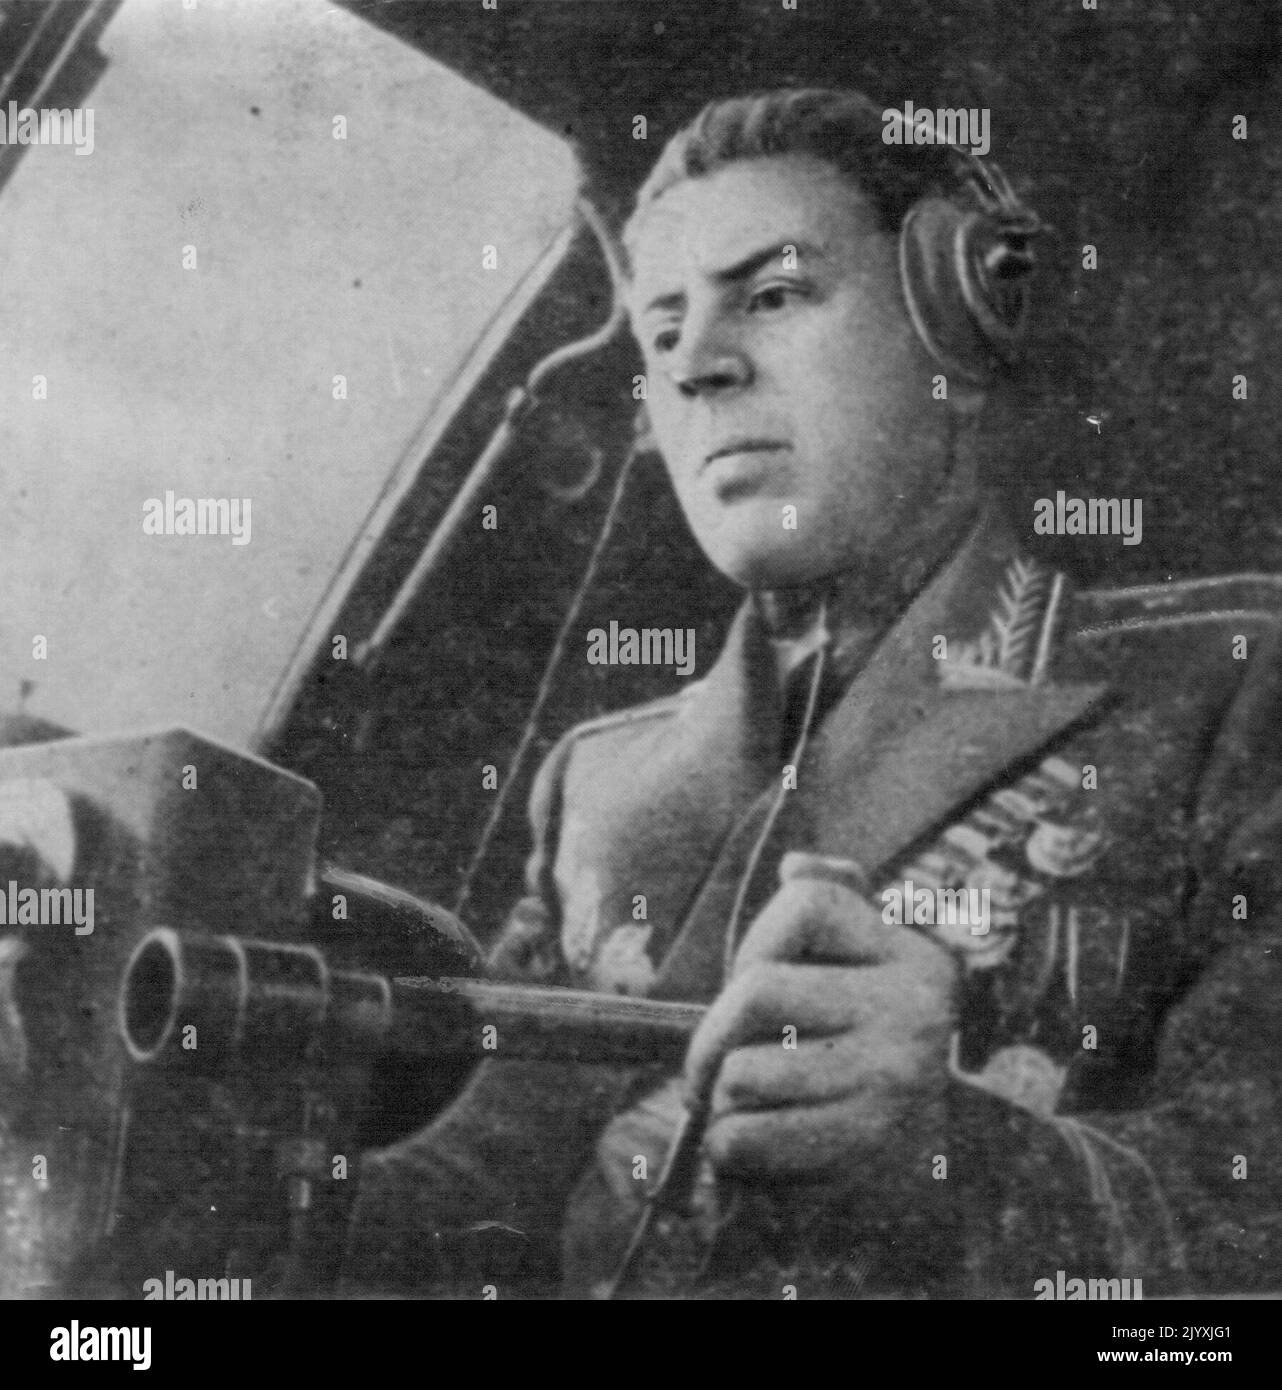 Maj. Gen. Vassily Stalin. March 16, 1955. Stock Photo